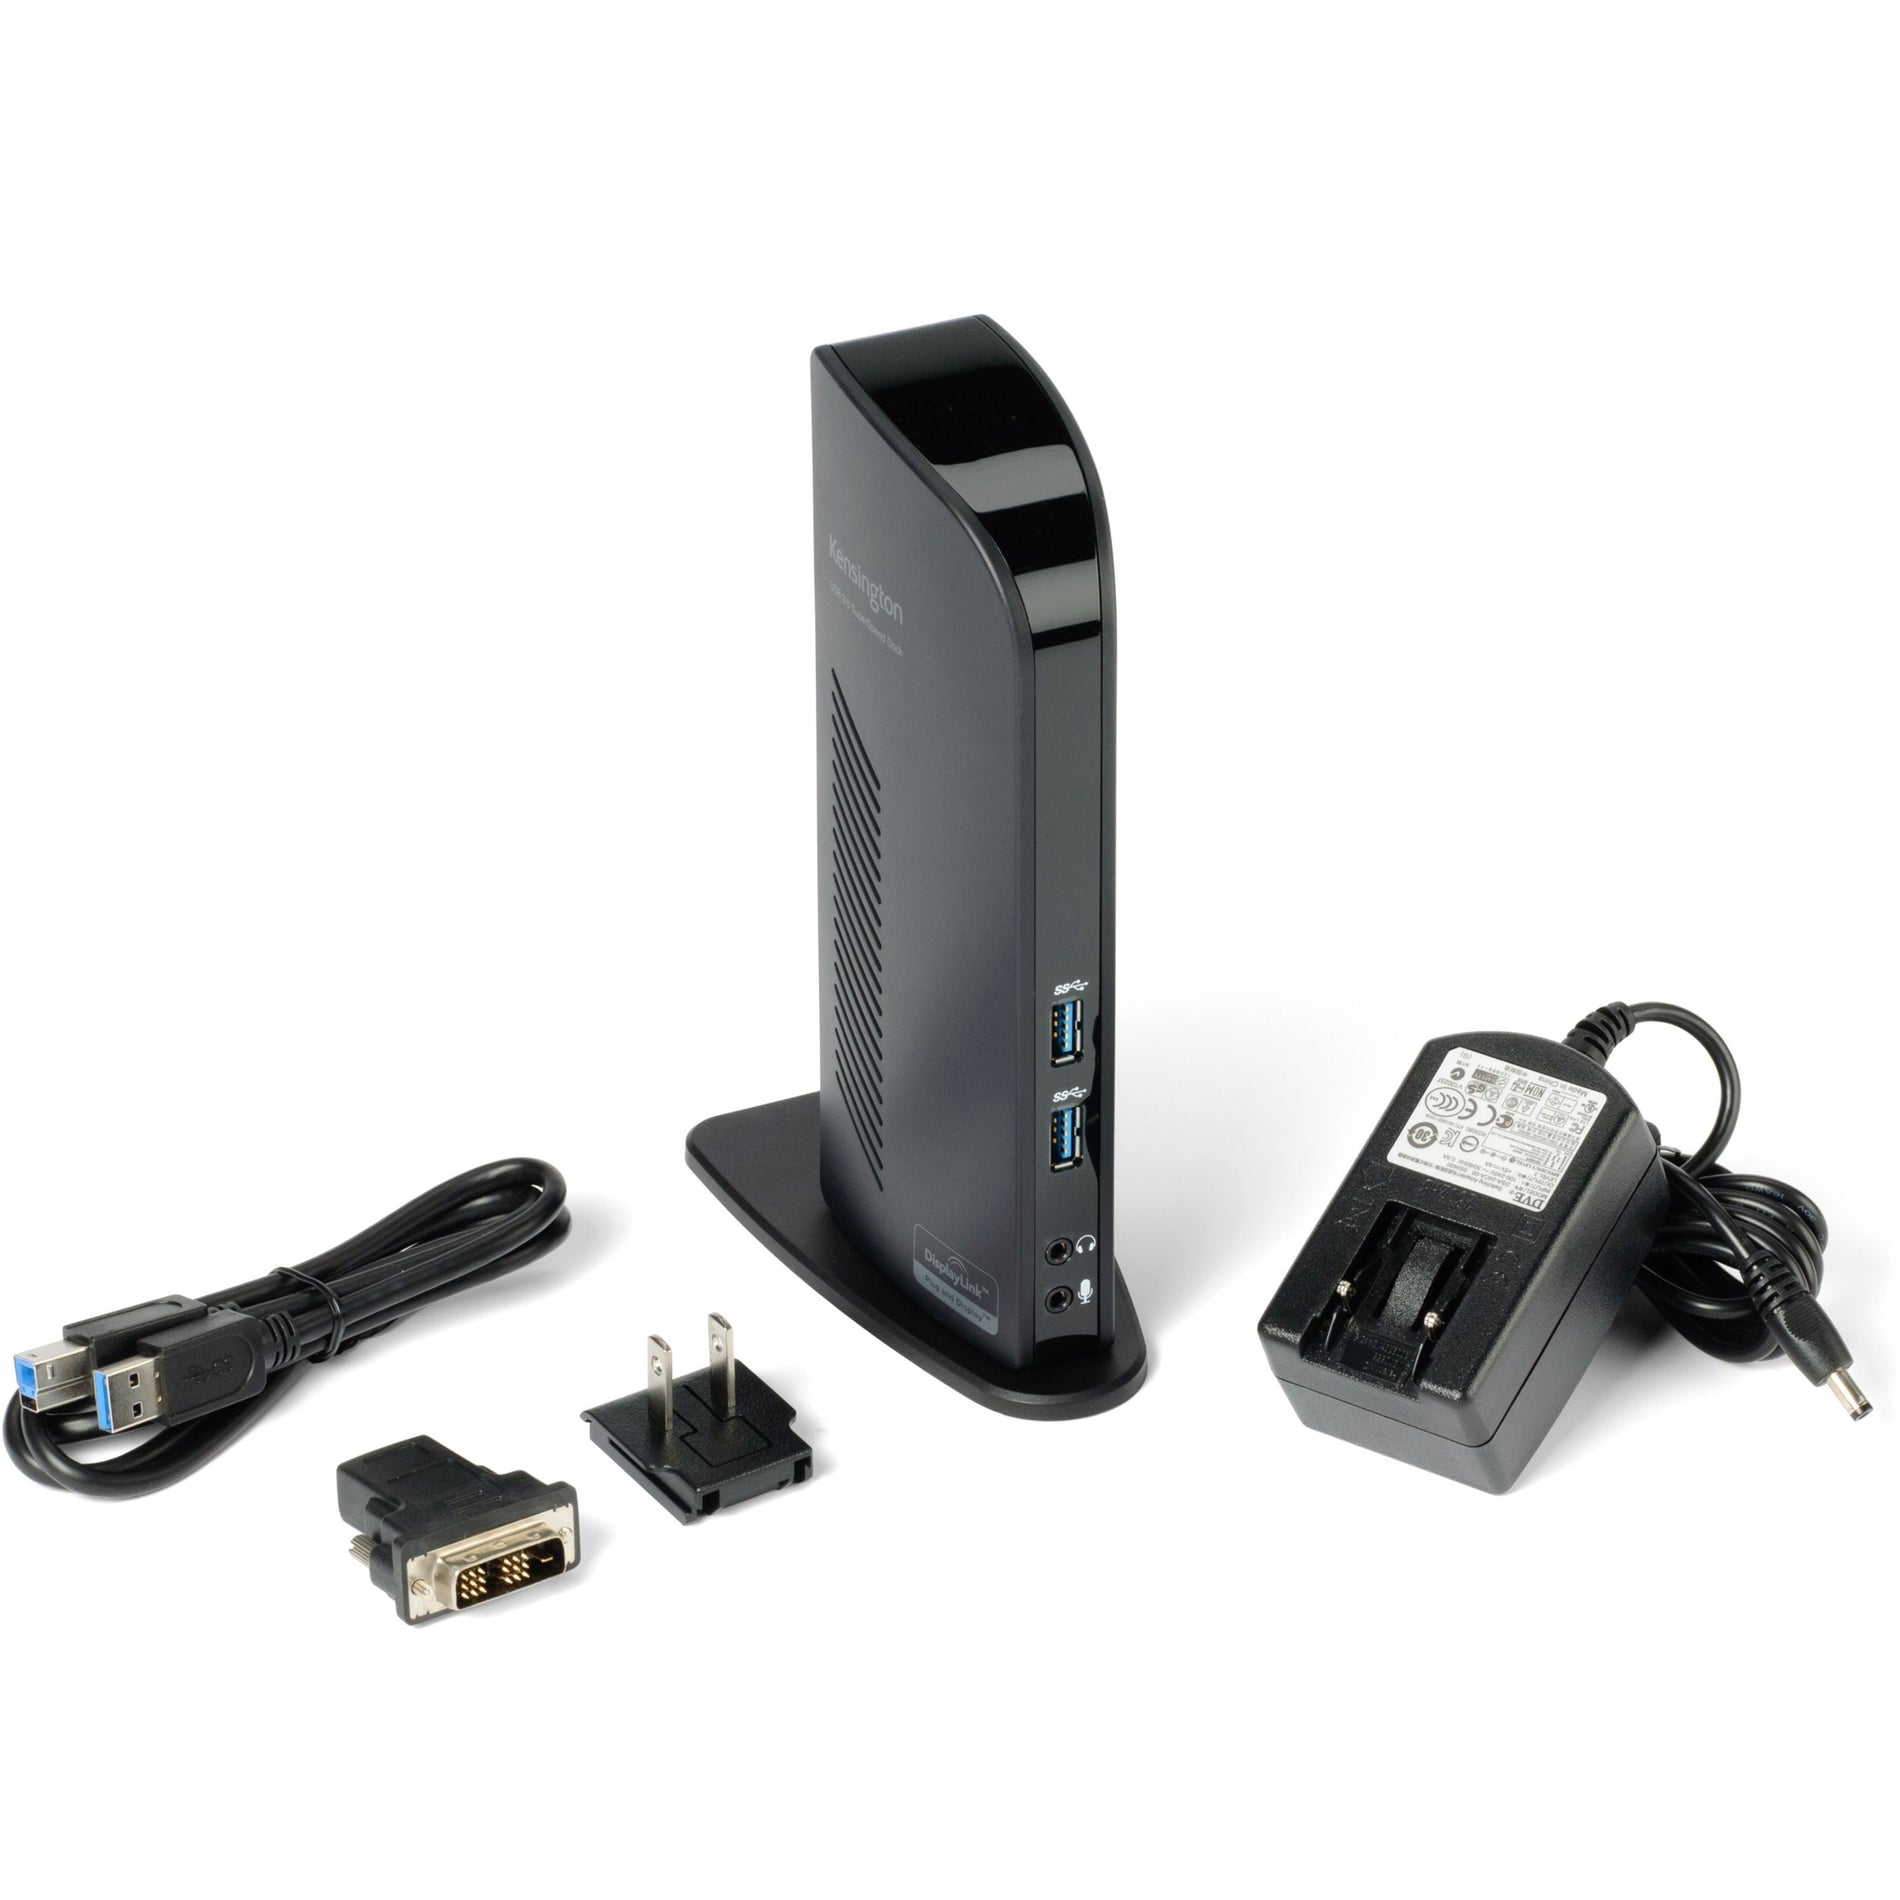 Kensington K33972US USB 3.0 Docking Station with Dual DVI/HDMI/VGA Video sd3500v, 6 USB Ports, Black